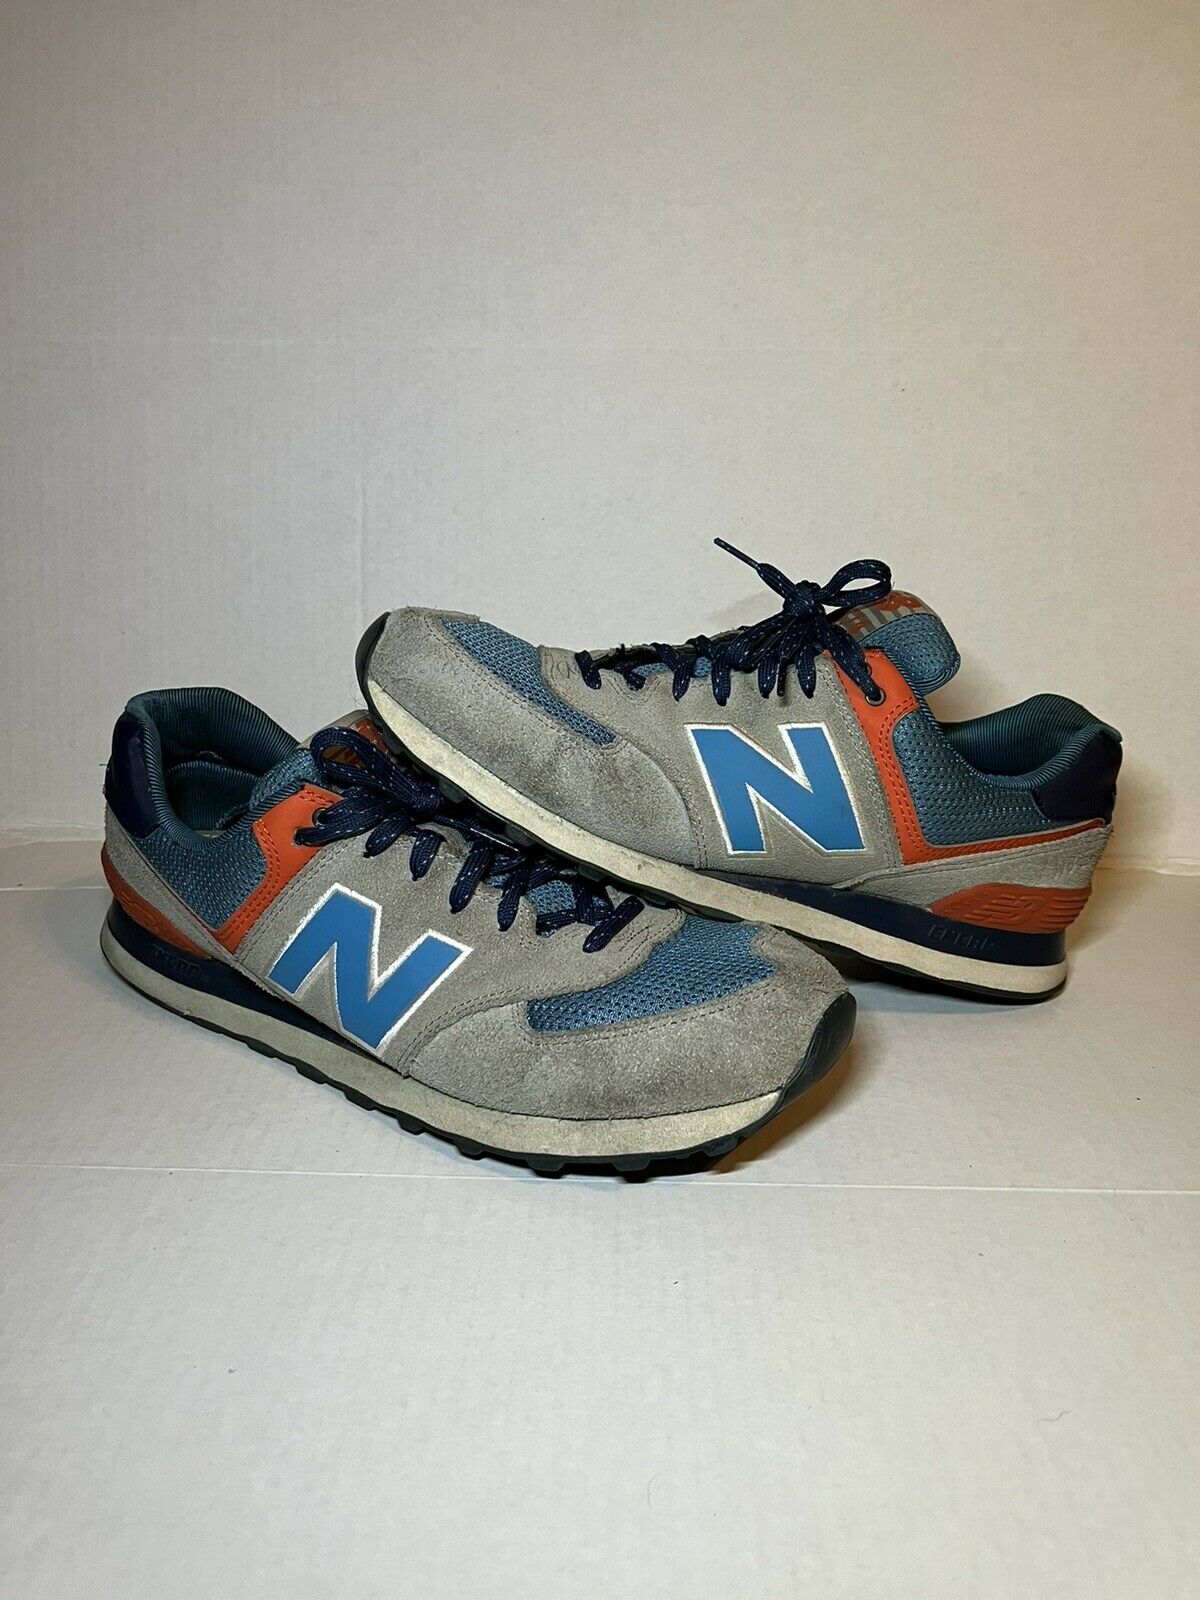 New Balance 574 Out East Men Sz 12.5 Shoes Orange Gray Blue Sneakers Retro